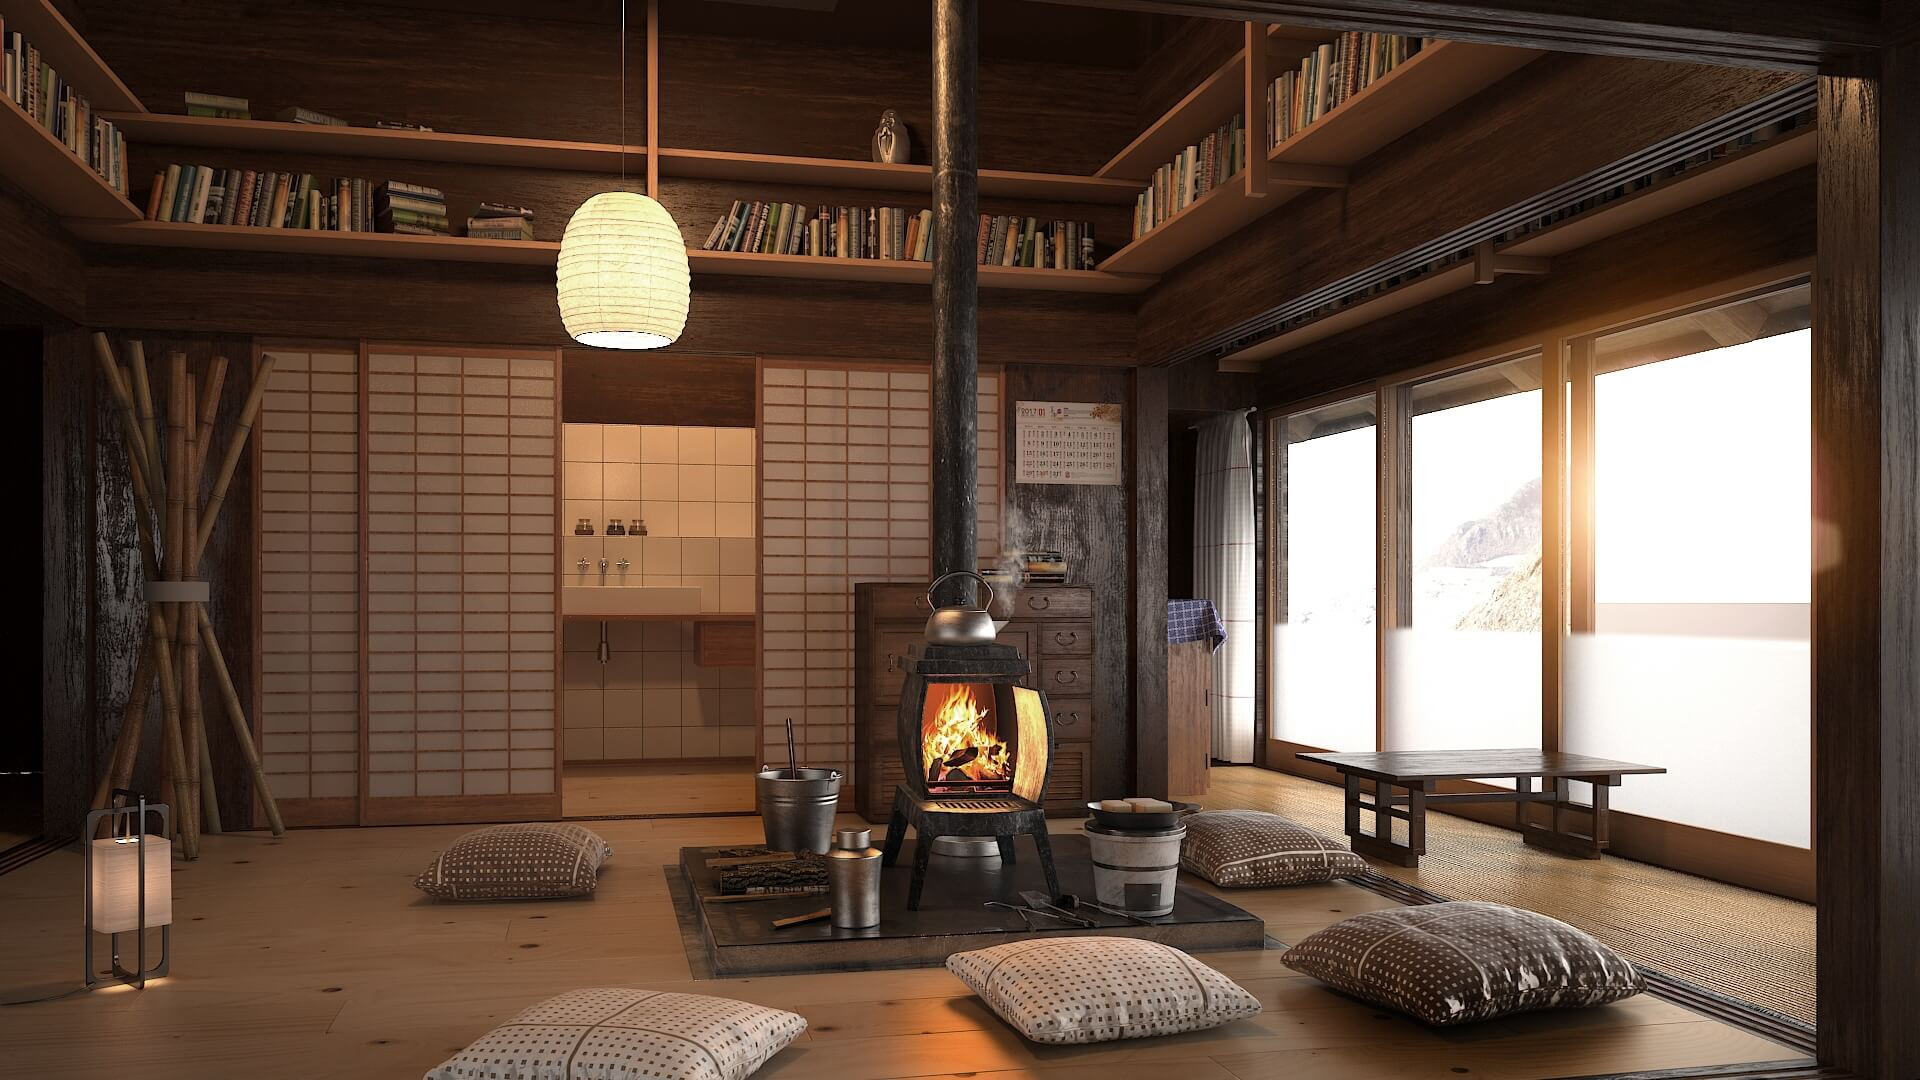 Japanese Living Room Ideas
 This Japanese Style Living Room Will Make You Feel Zen